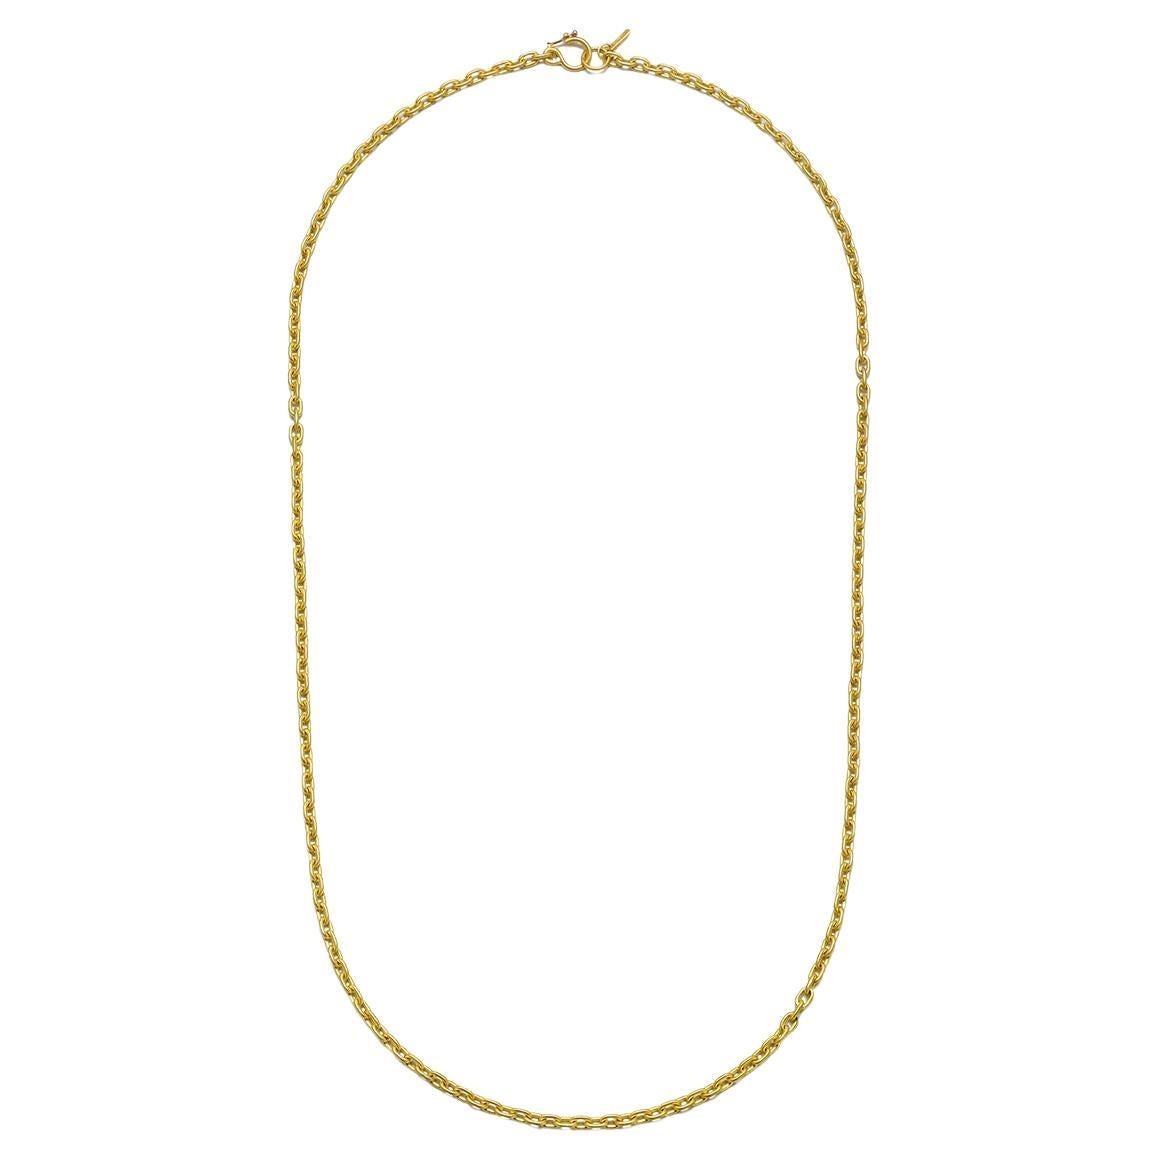 Faye Kim 18 Karat Gold Heavy Oval Link Chain, Mini Length 27" For Sale